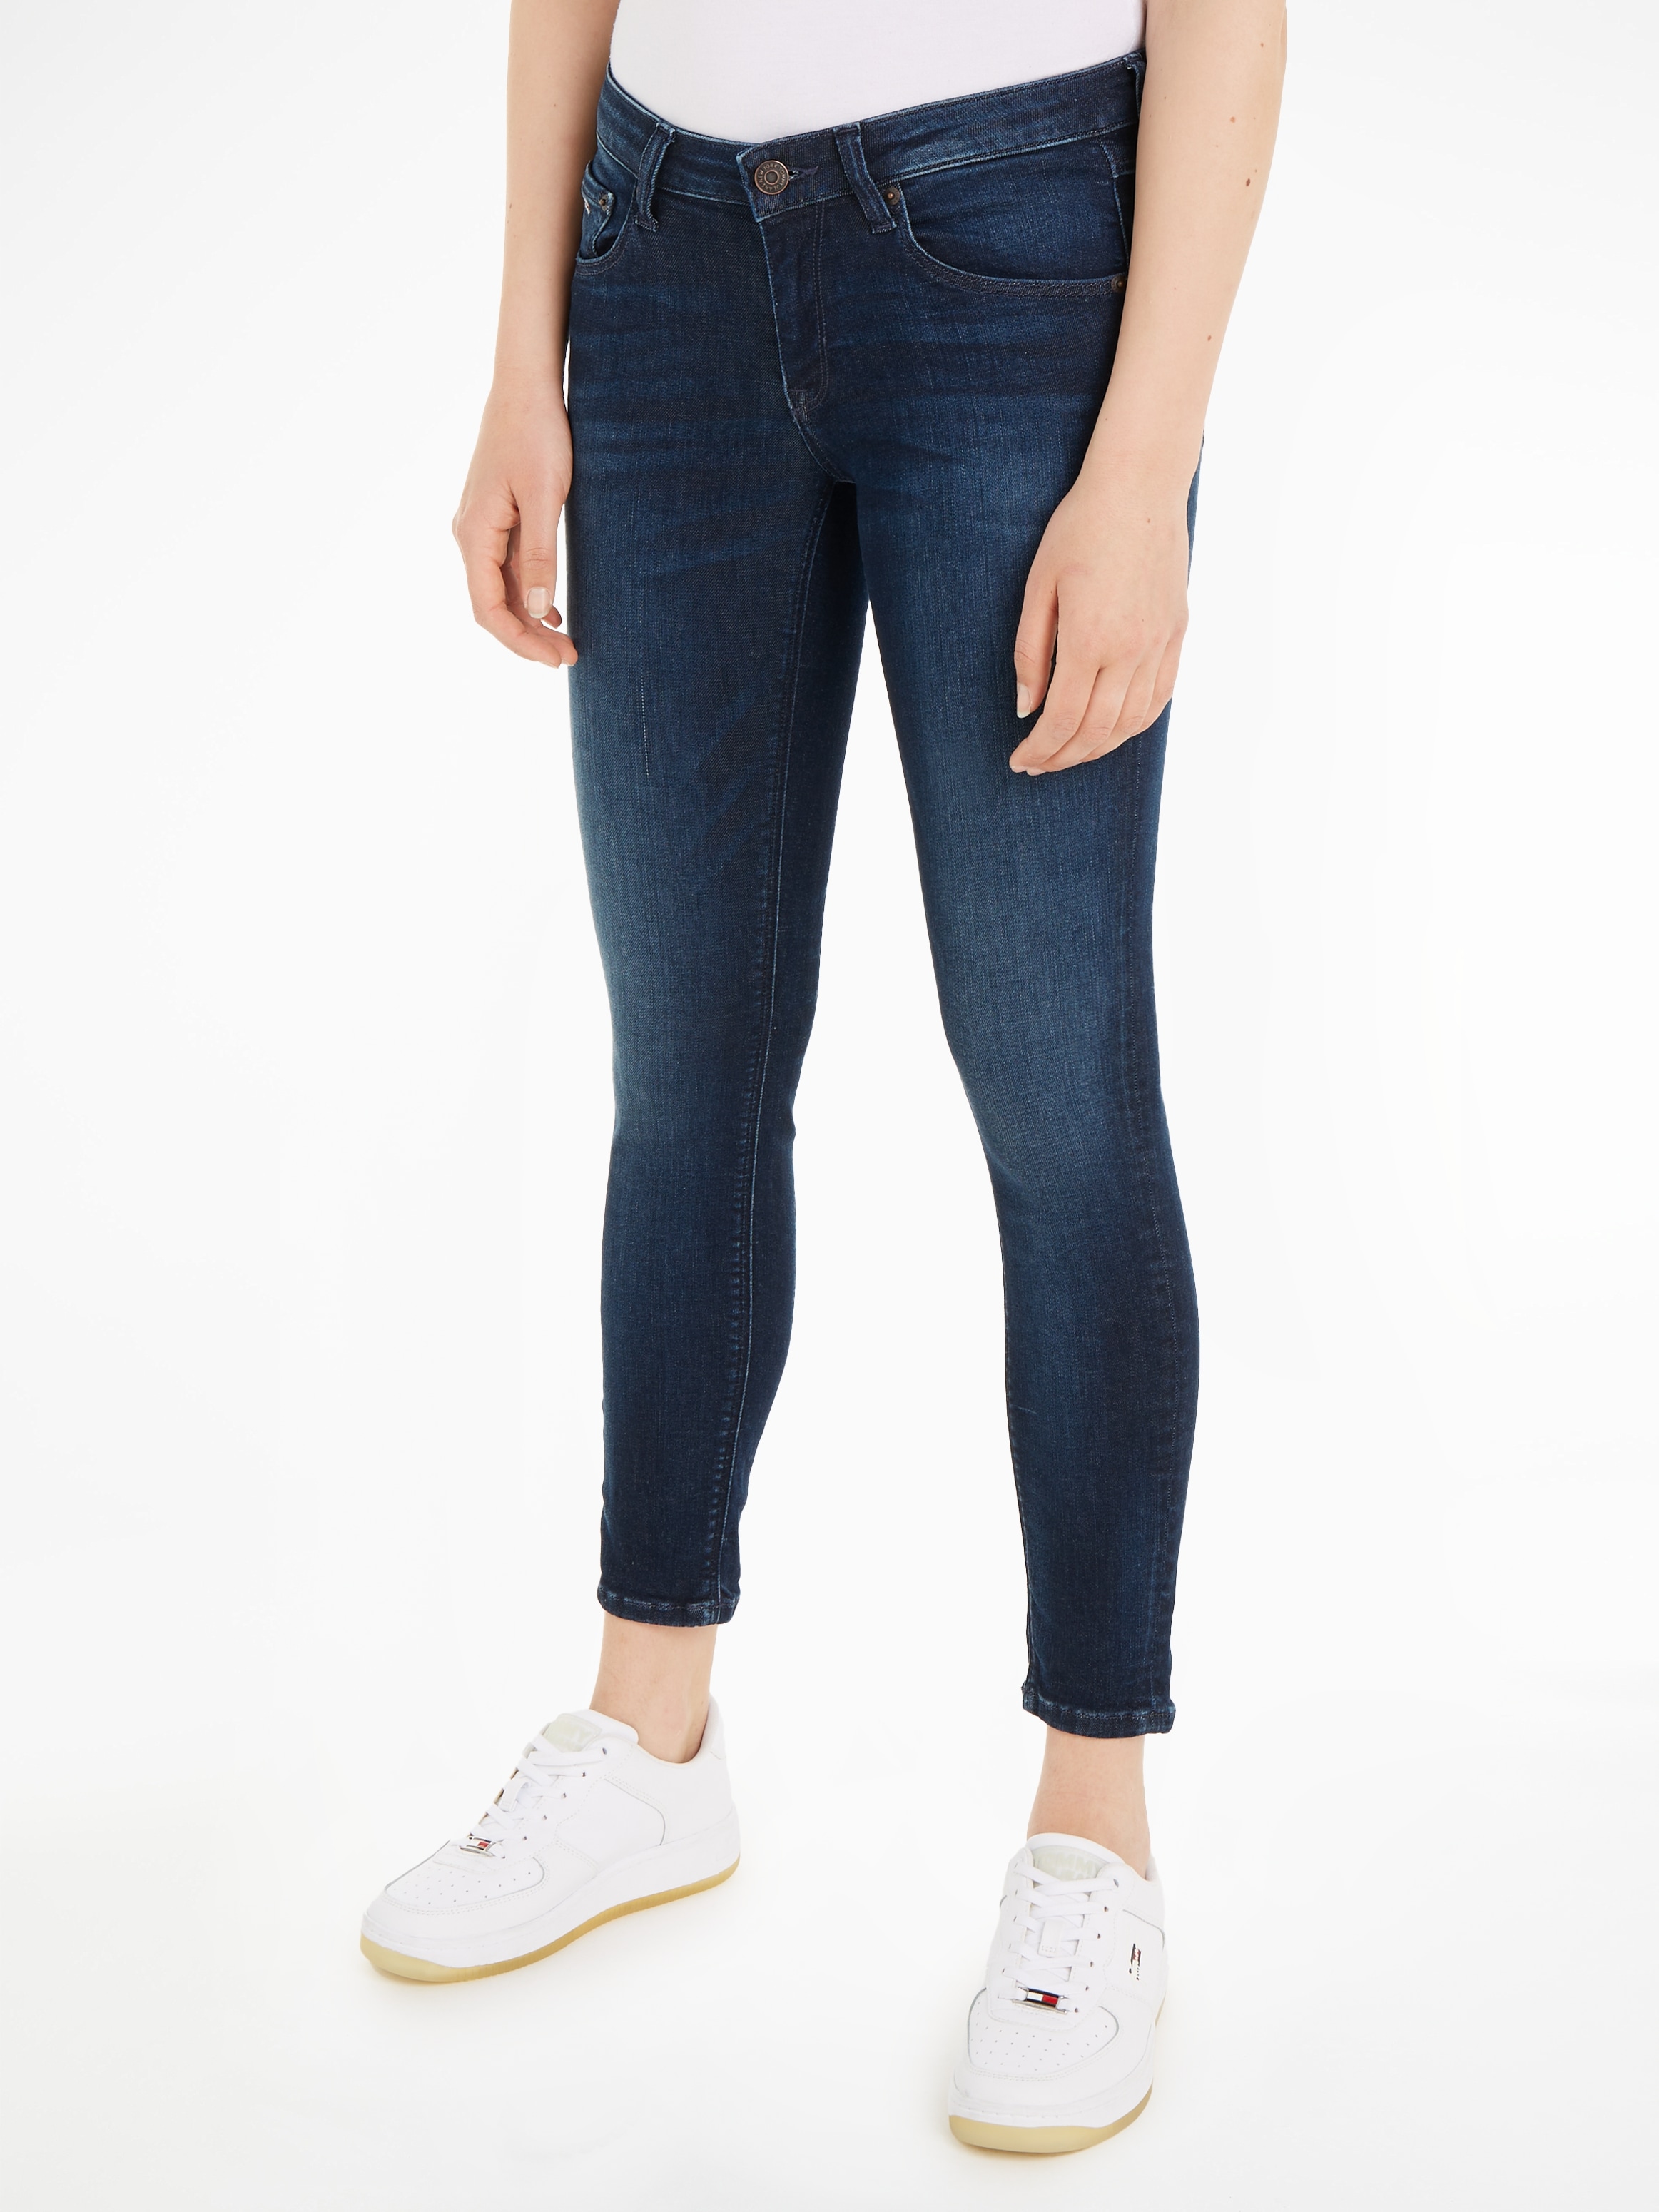 »Scarlett«, OTTO Tommy online Jeans bei Ledermarkenlabel Bequeme mit Jeans